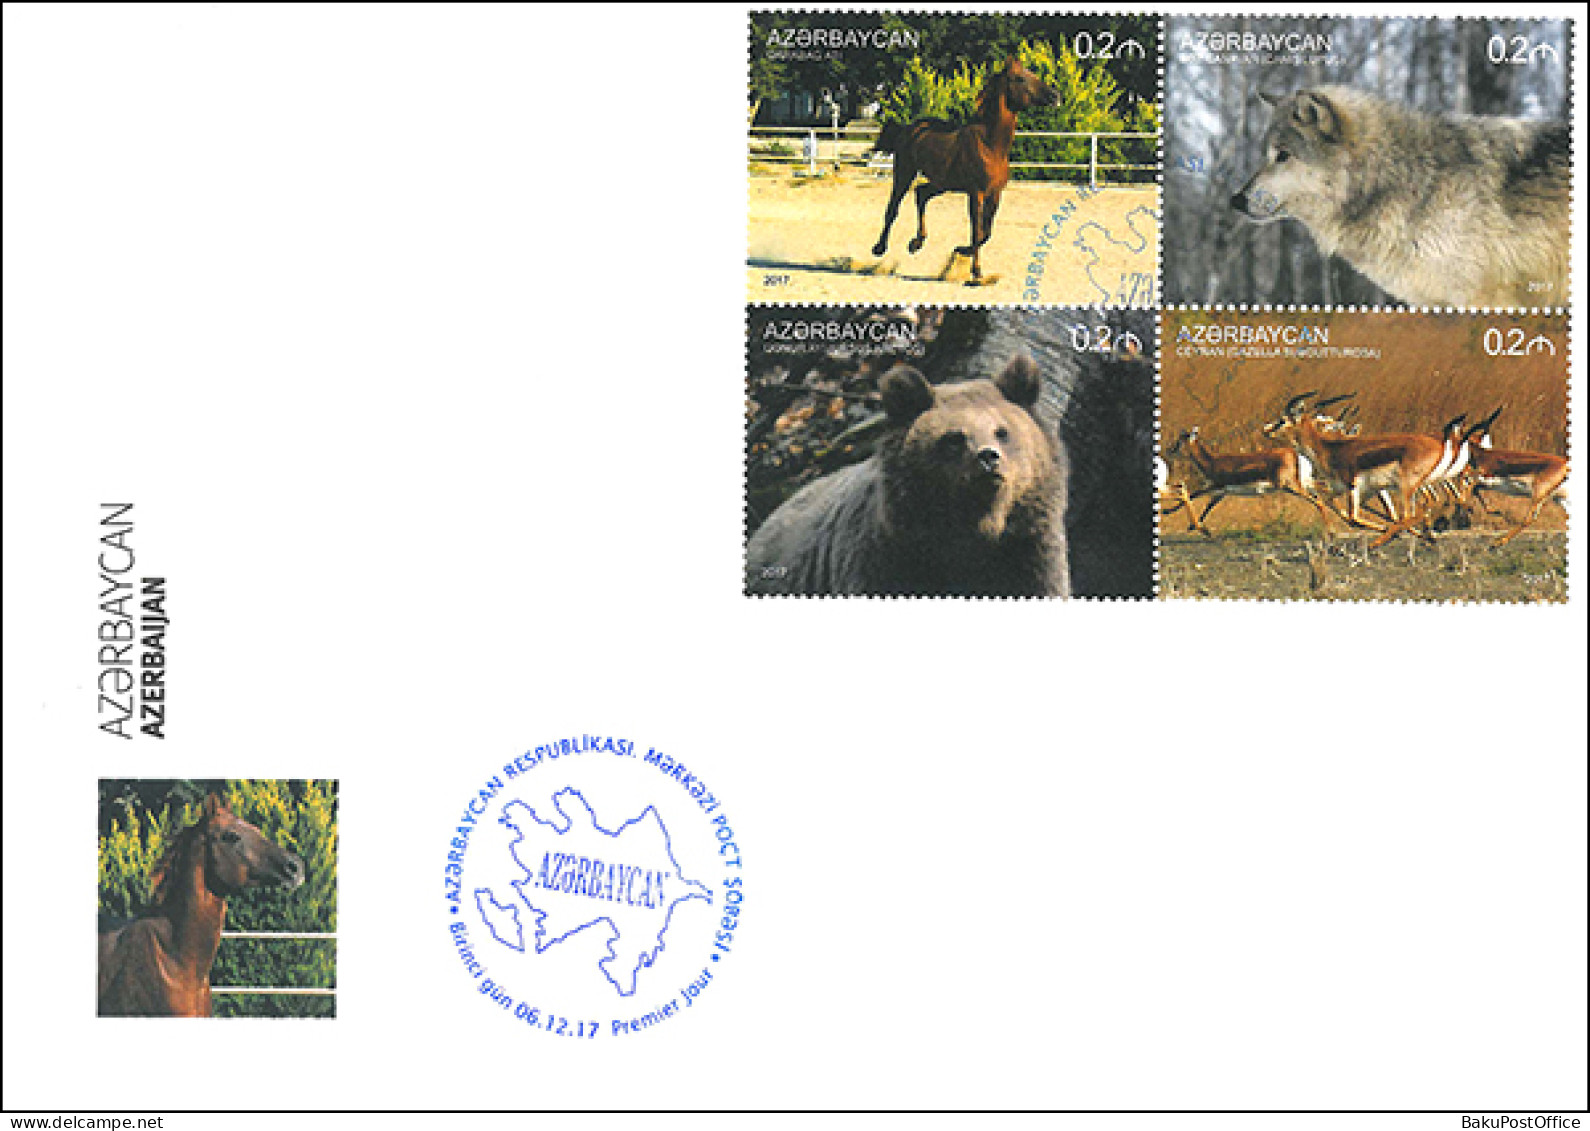 Azerbaijan 2017 FDC First Day Cover Book “Azerbaijan”. Fauna
1 Horse Bear Wolf Gazelle - Azerbaïdjan